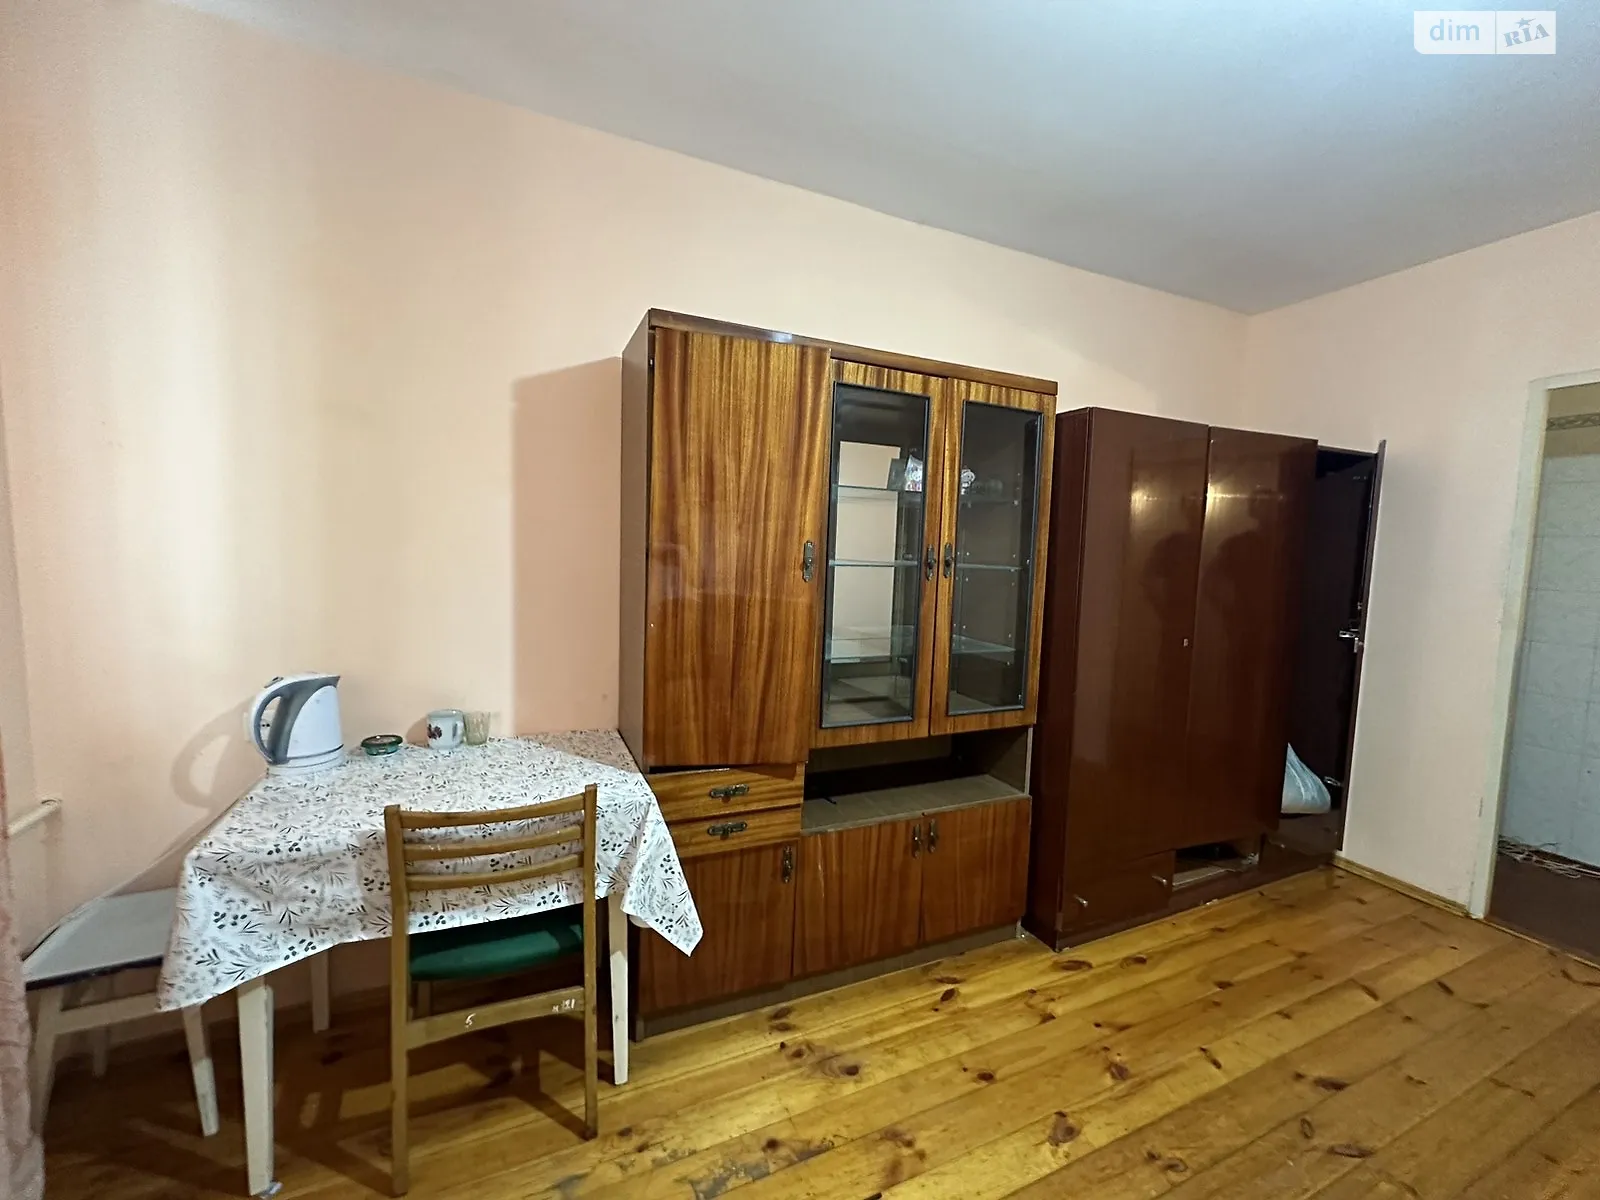 Продается комната 18 кв. м в Ровно - фото 3